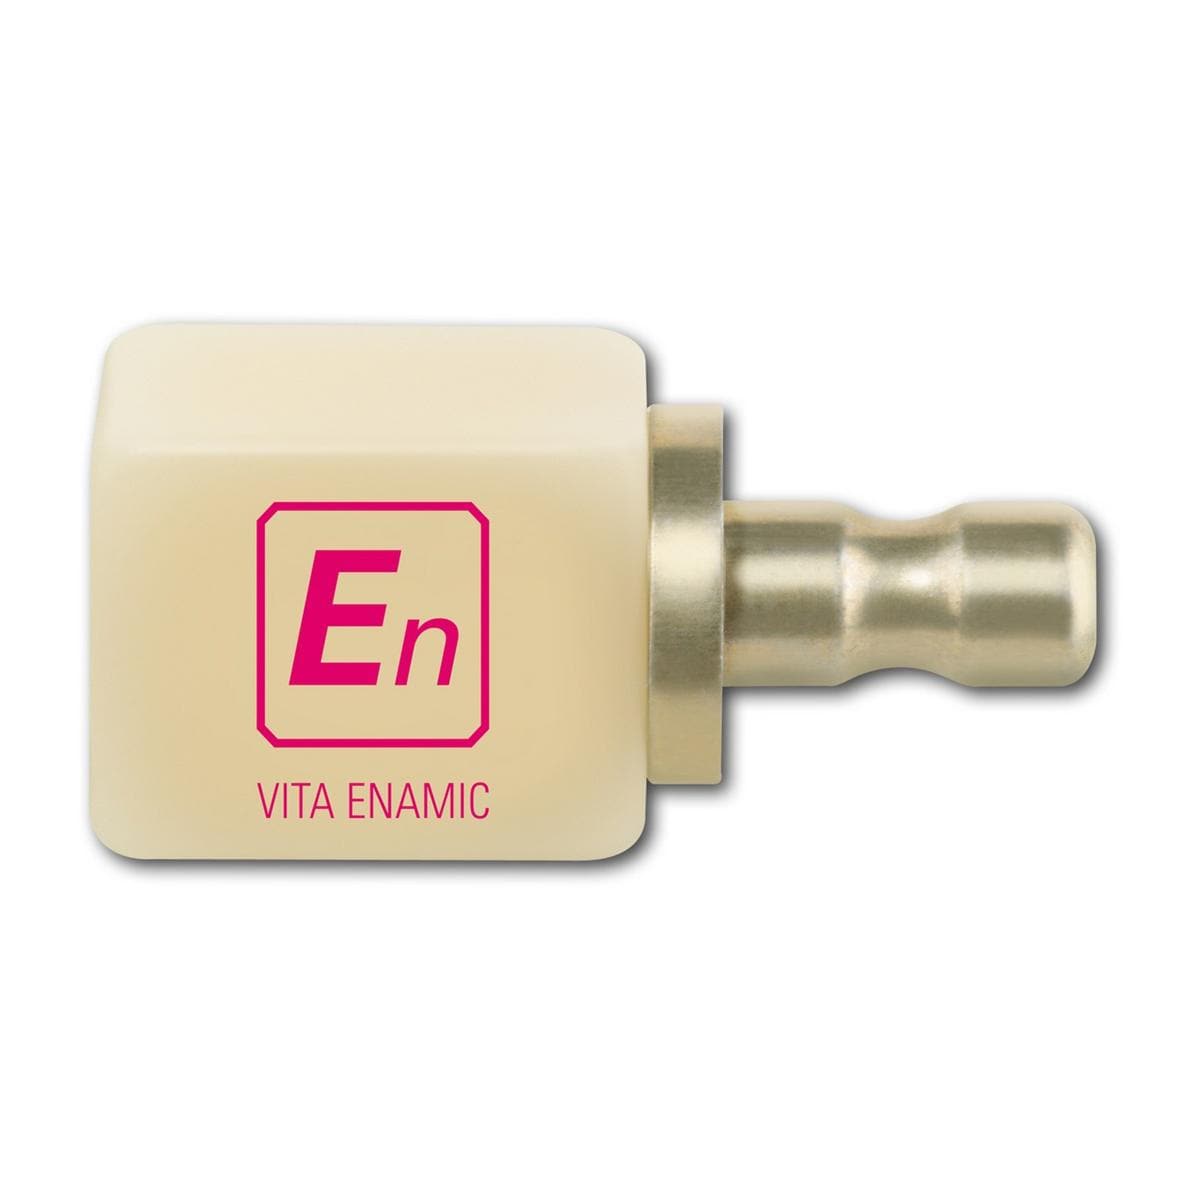 VITA ENAMIC - Recharge - EM-14, 3M2-HT